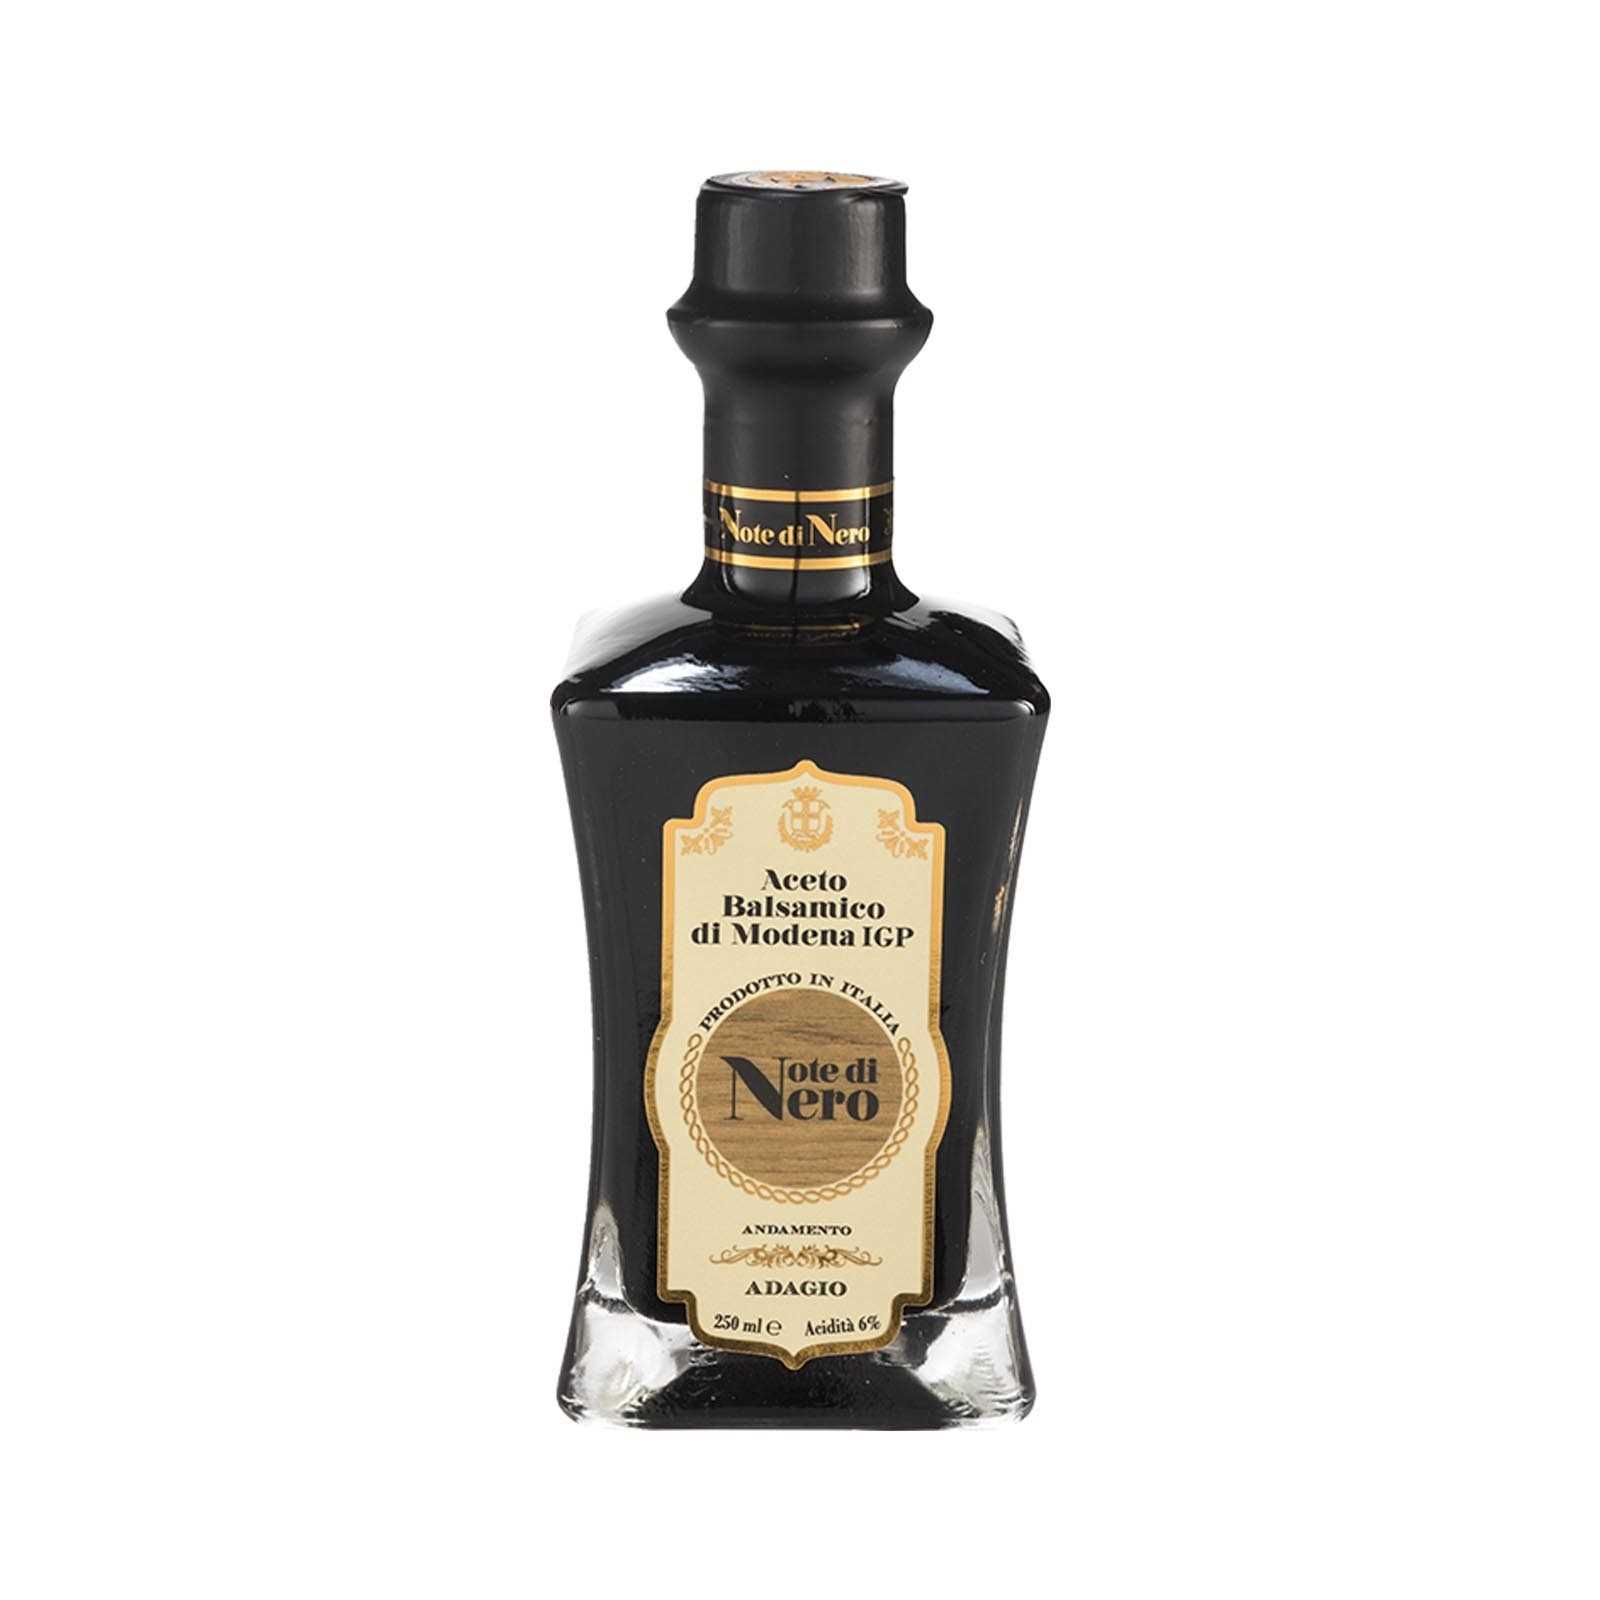 “Adagio” - PGI Balsamic Vinegar Of Modena (Acidity: 6%) - 100% Italian - “Note Di Nero”.